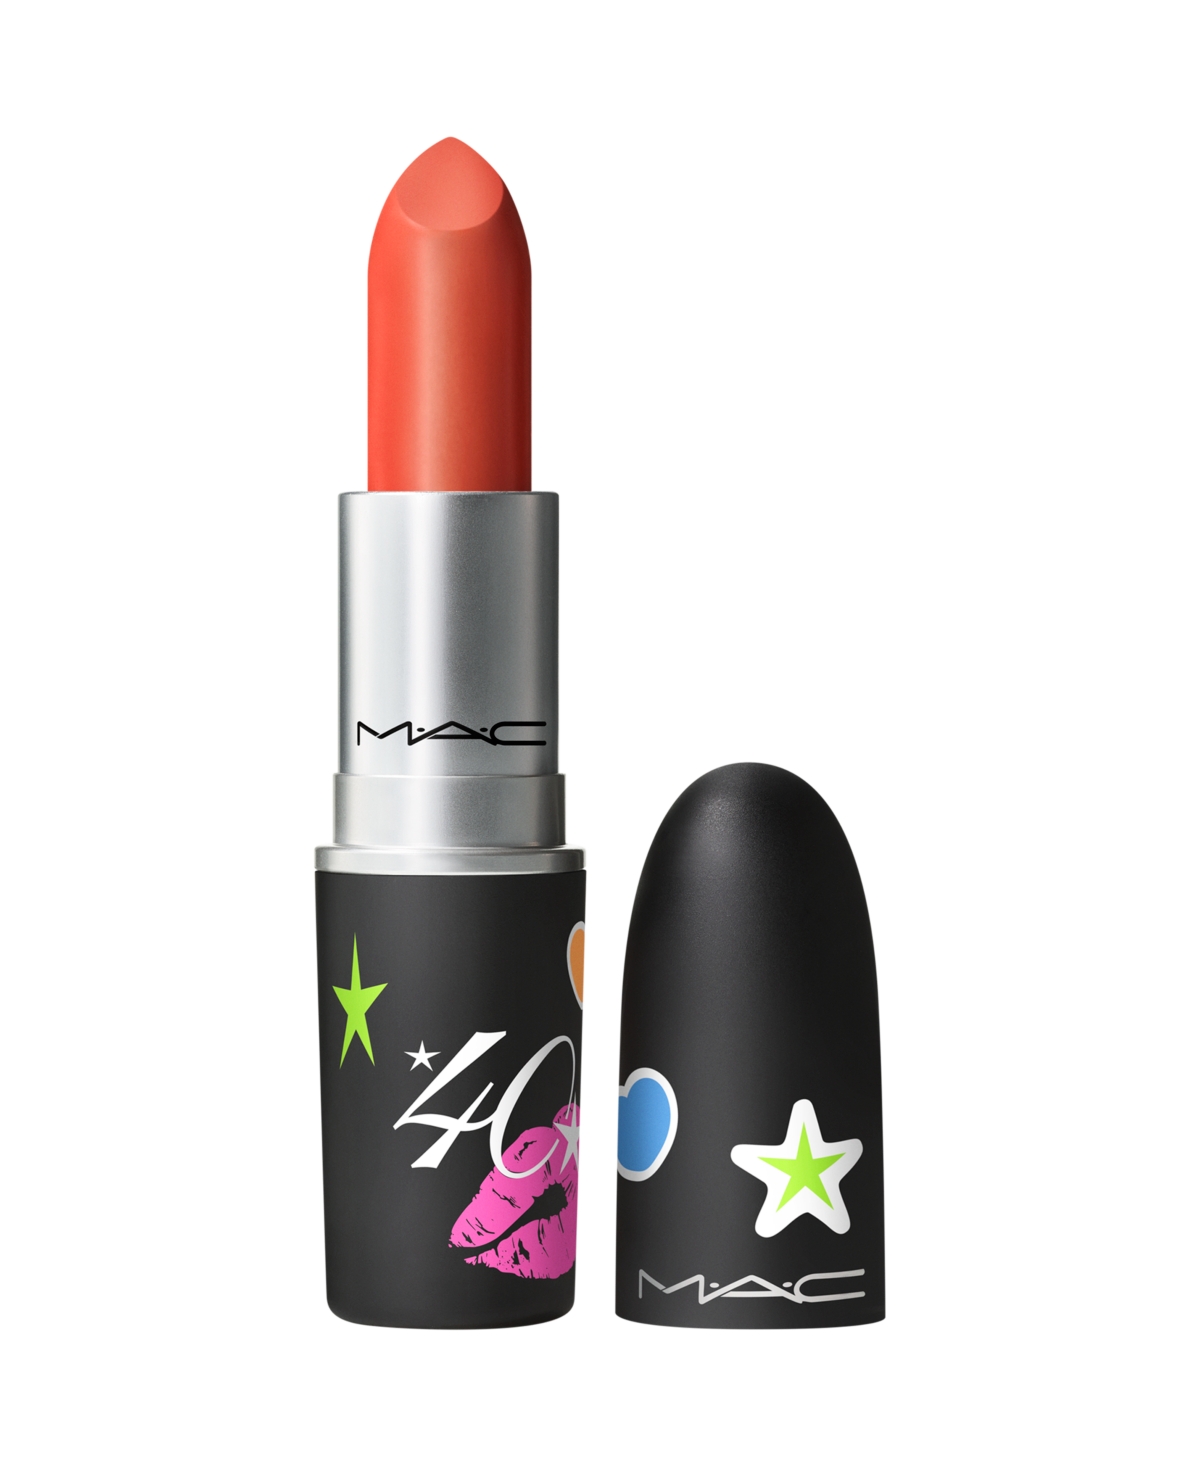 Limited-Edition Cremesheen Lipstick - Shanghai Spice